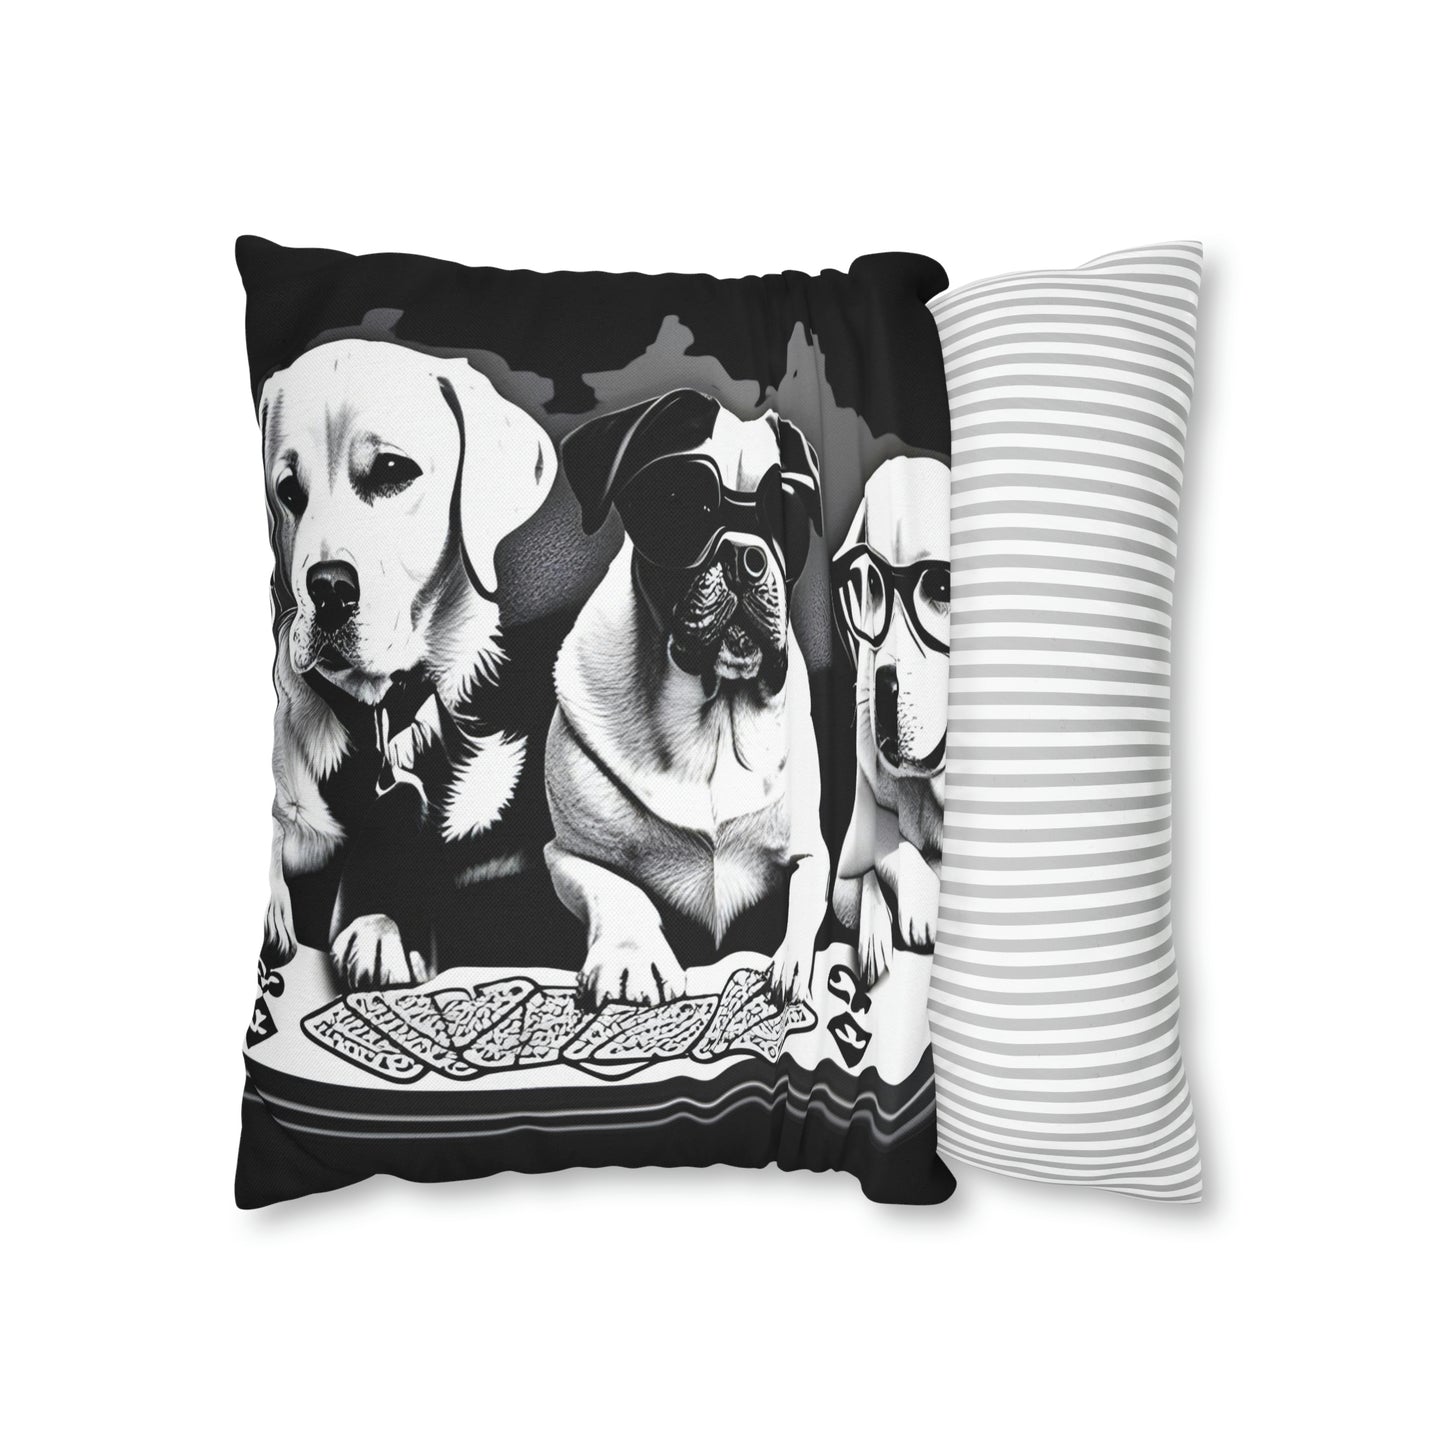 Black Scripture Spun Polyester Square Pillow | Spun Polyester Square Pillow Case | Dogs Playing card | Dog Décor pillow